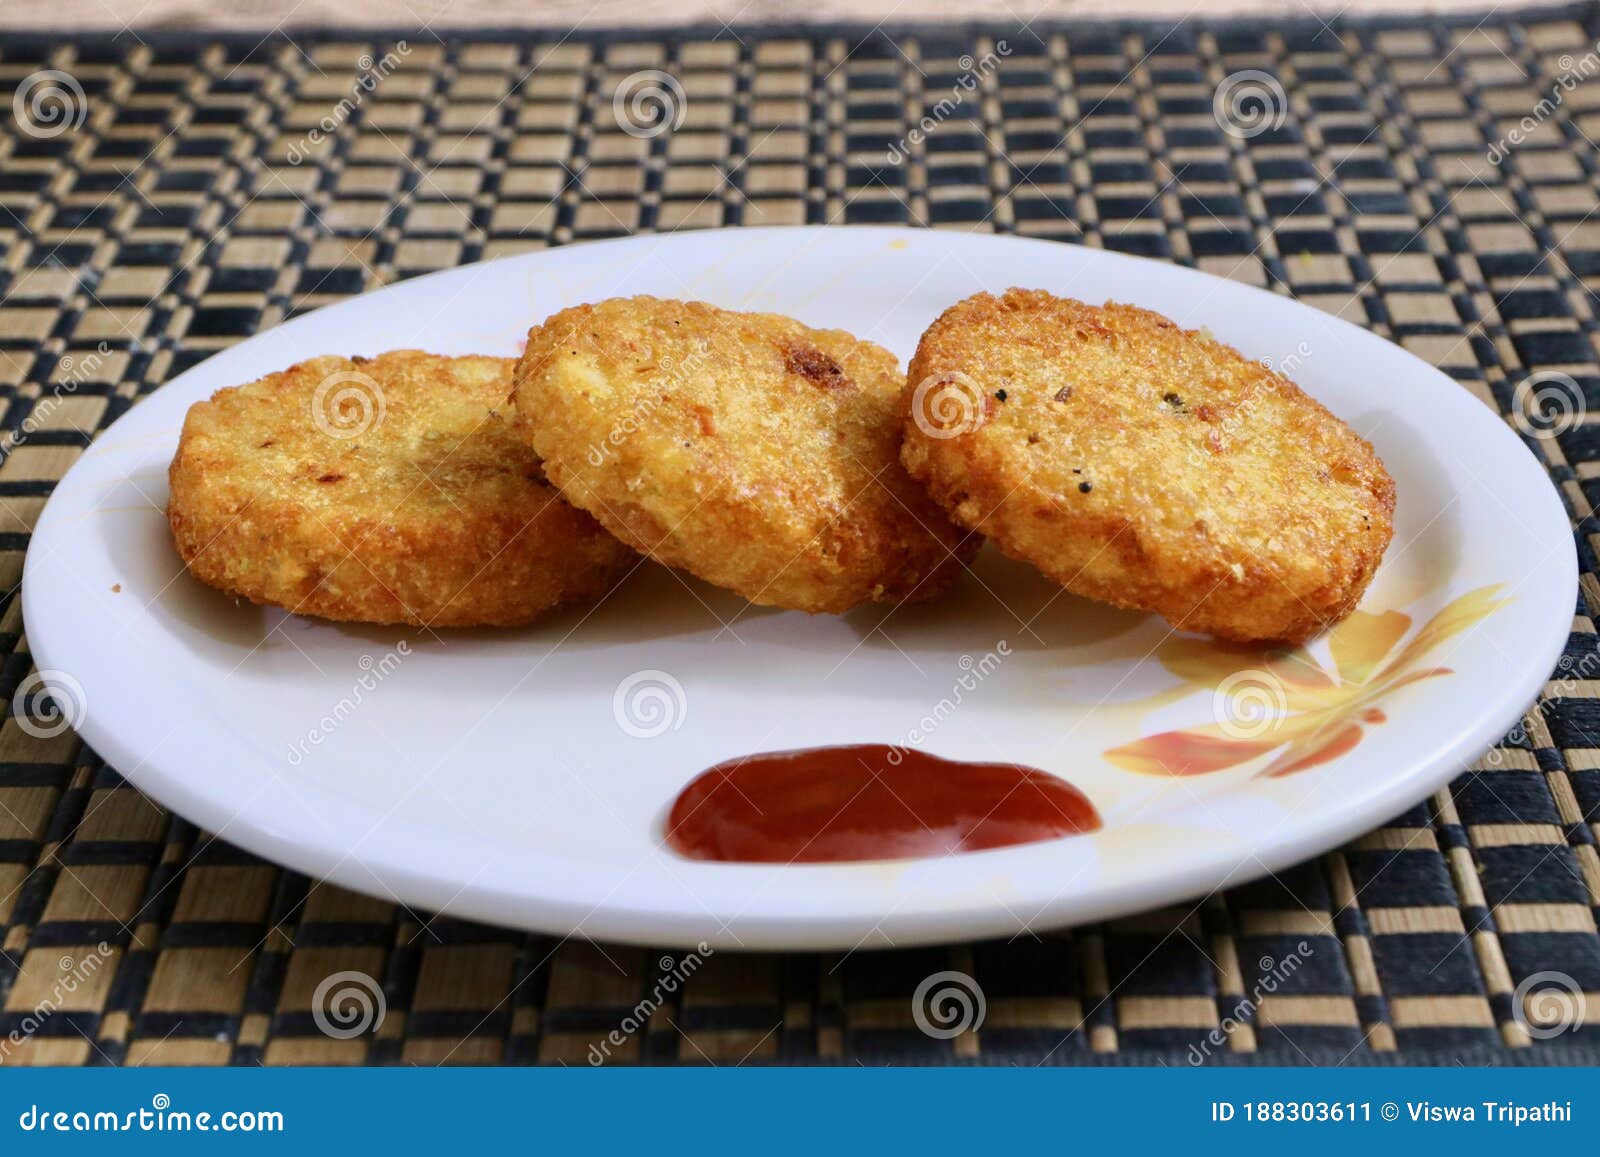 Aloo Tikki Ready To Serve for Evening Snacks Stock Image - Image ...